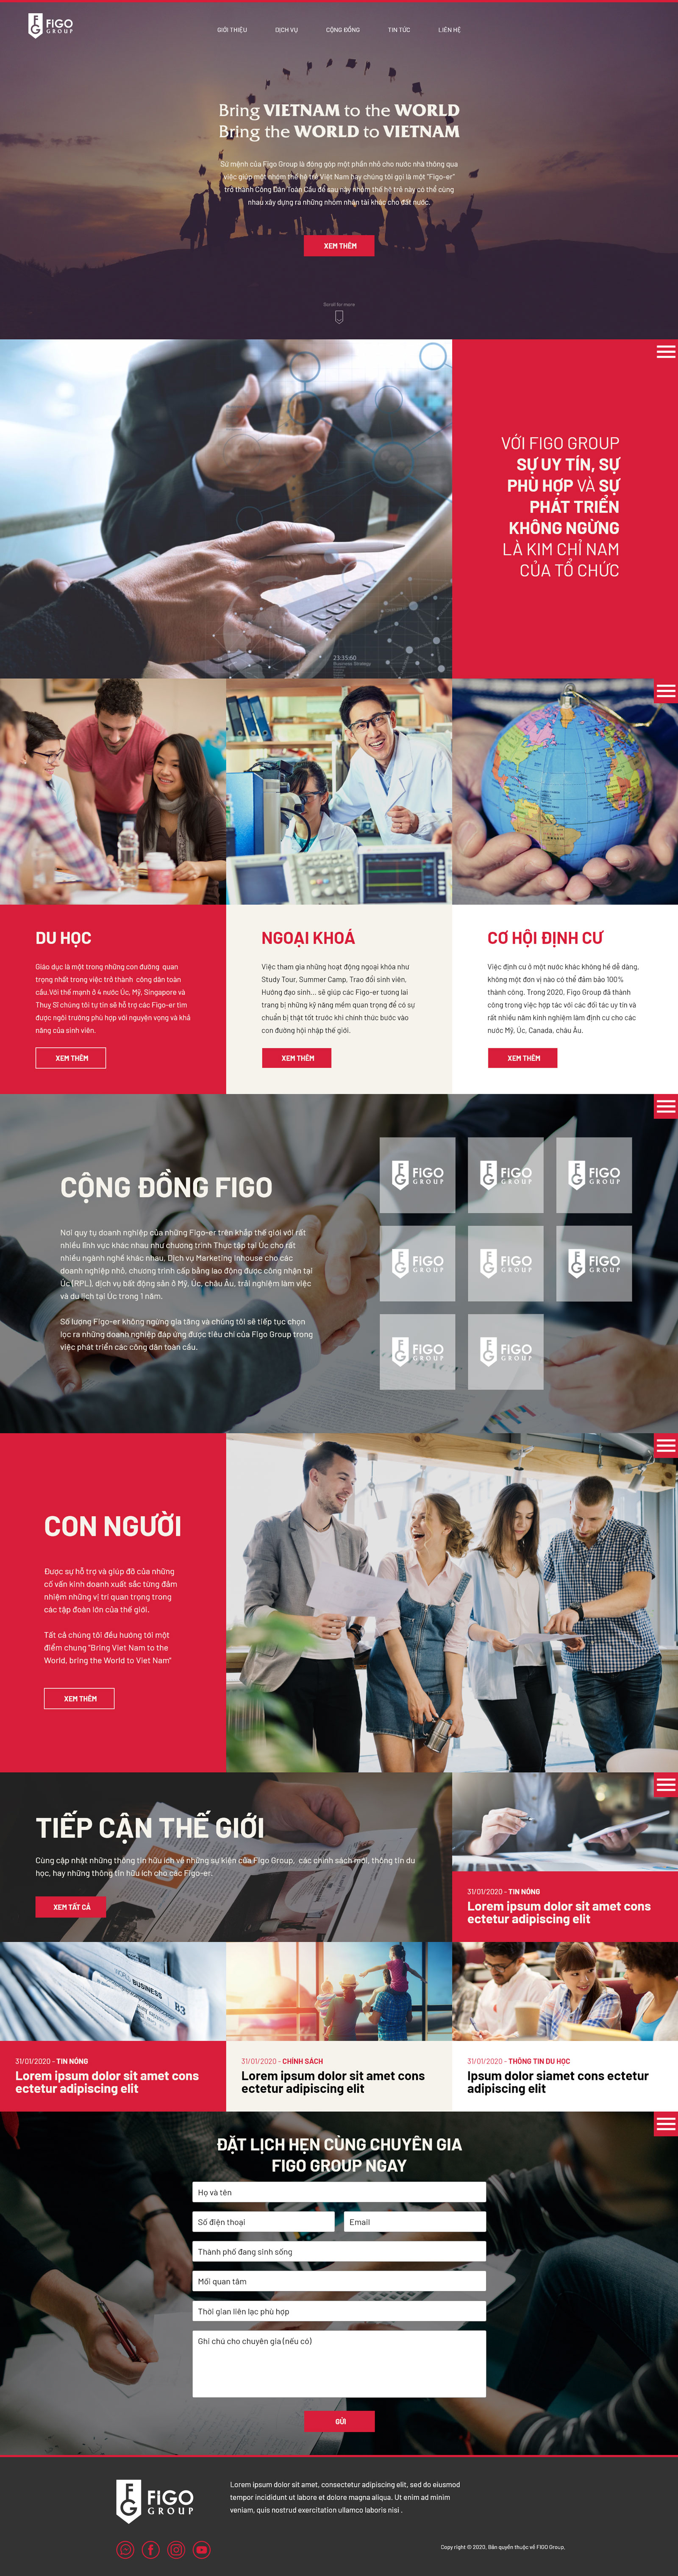 Thiết kế website cộng đồng Figo Group